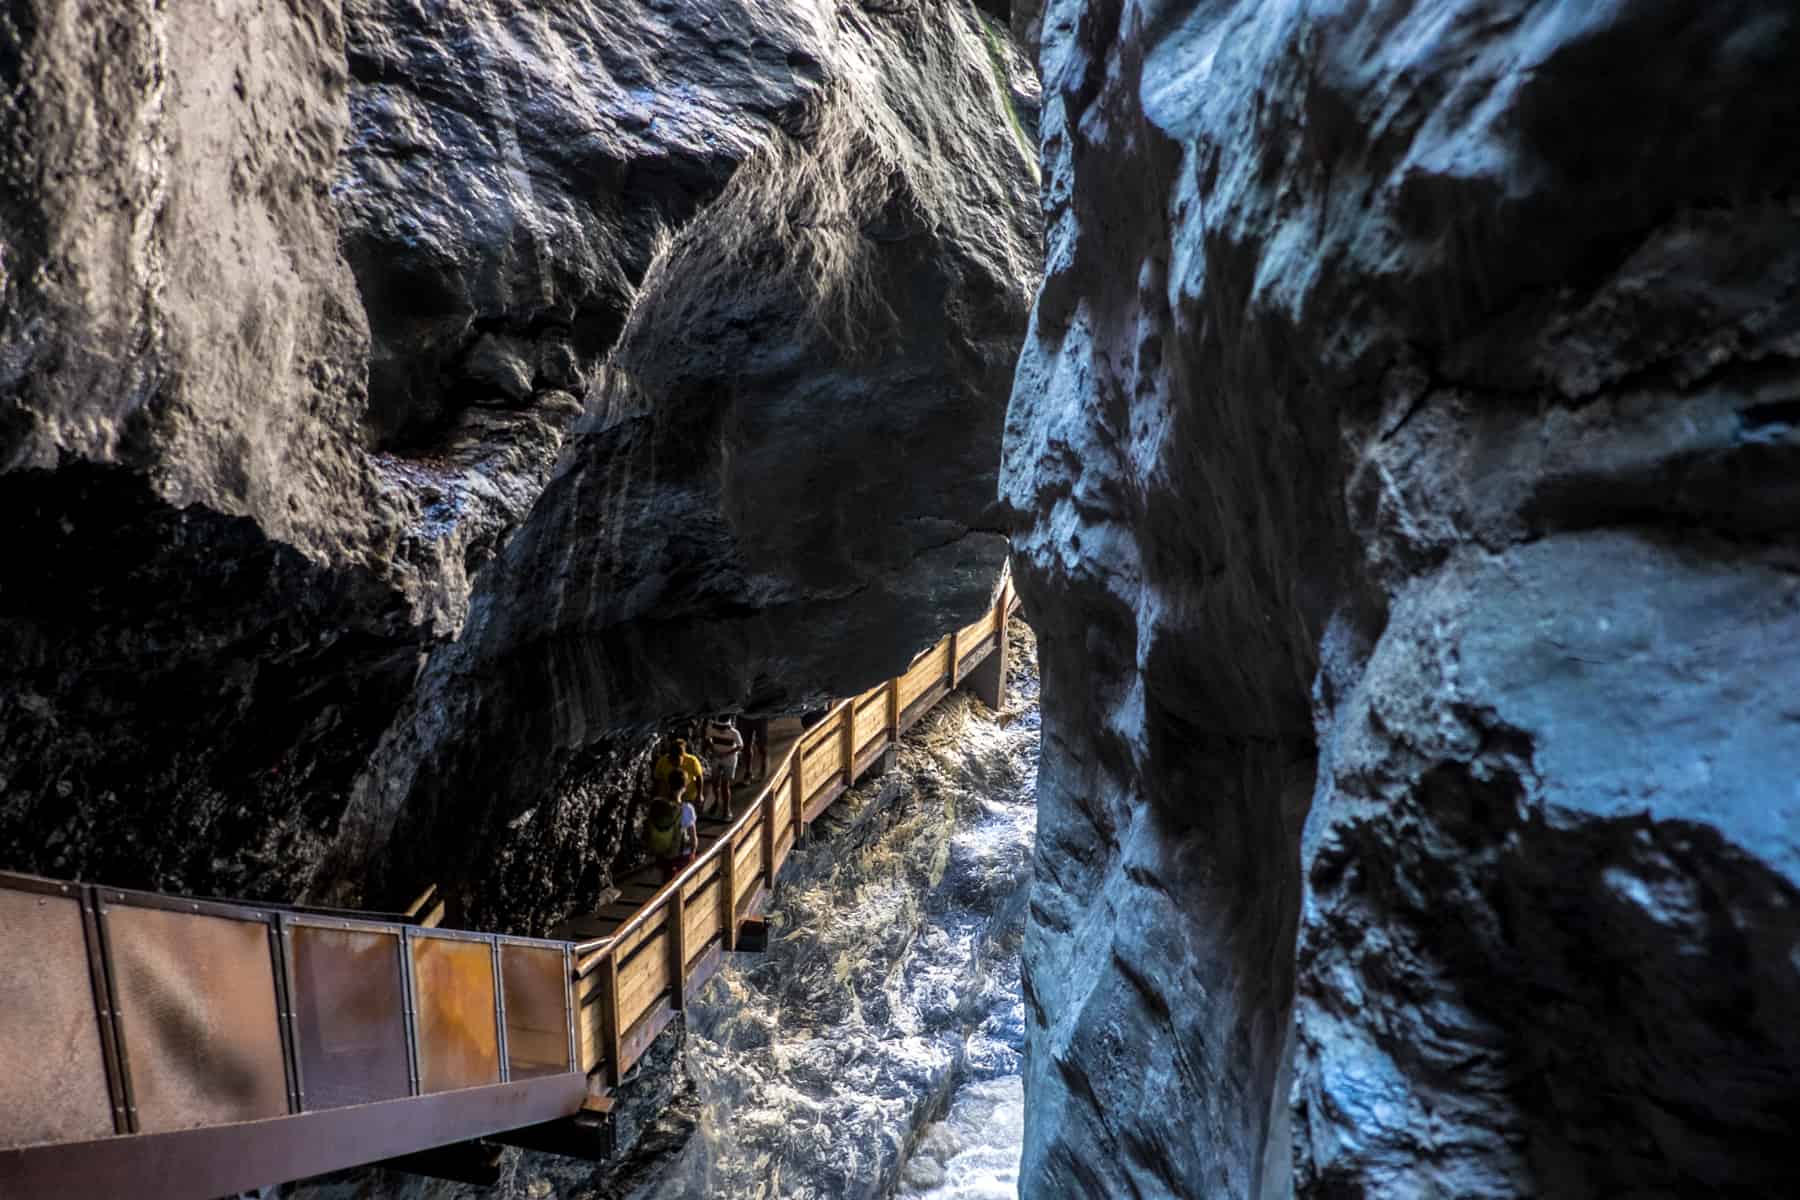 A steel and wooden walkway leads through the silver and blue toned gorge walls in Liechtensteinklamm in St Johann im Pongau Austria